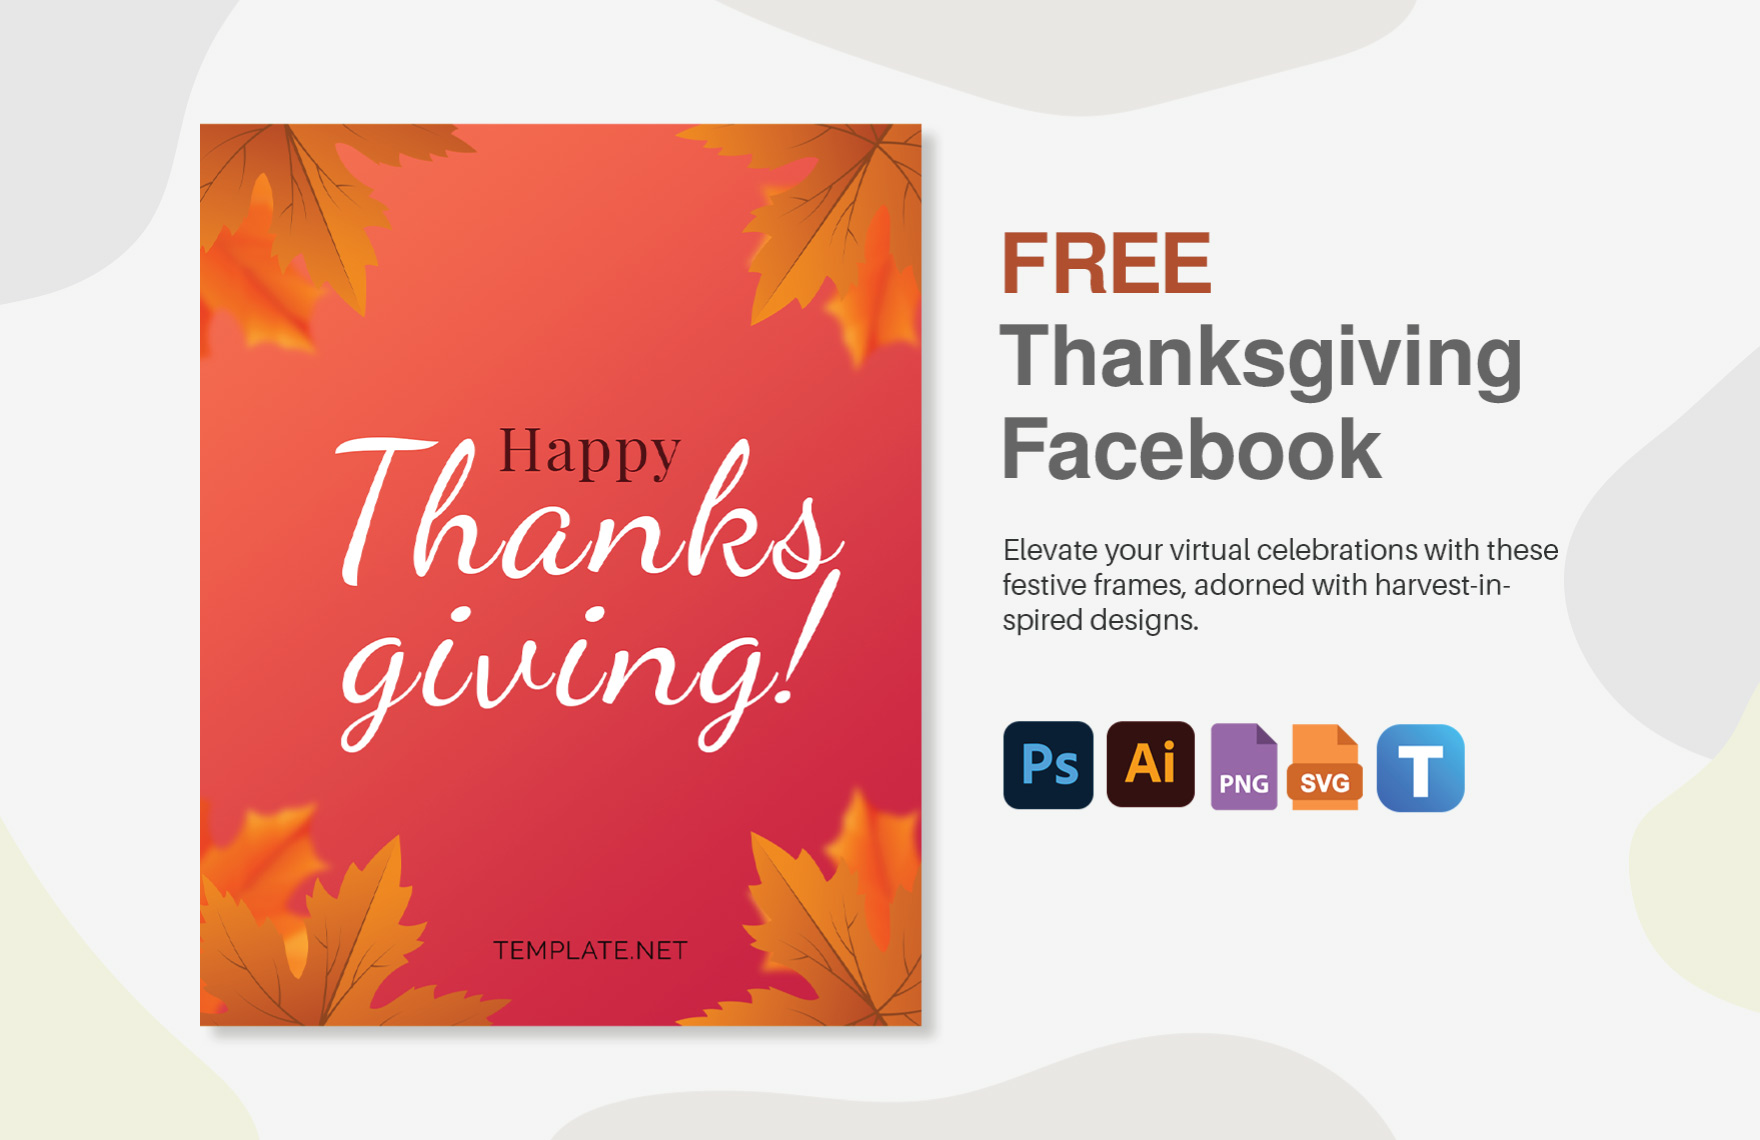 Free Thanksgiving Facebook in PDF, Illustrator, PSD, SVG, PNG